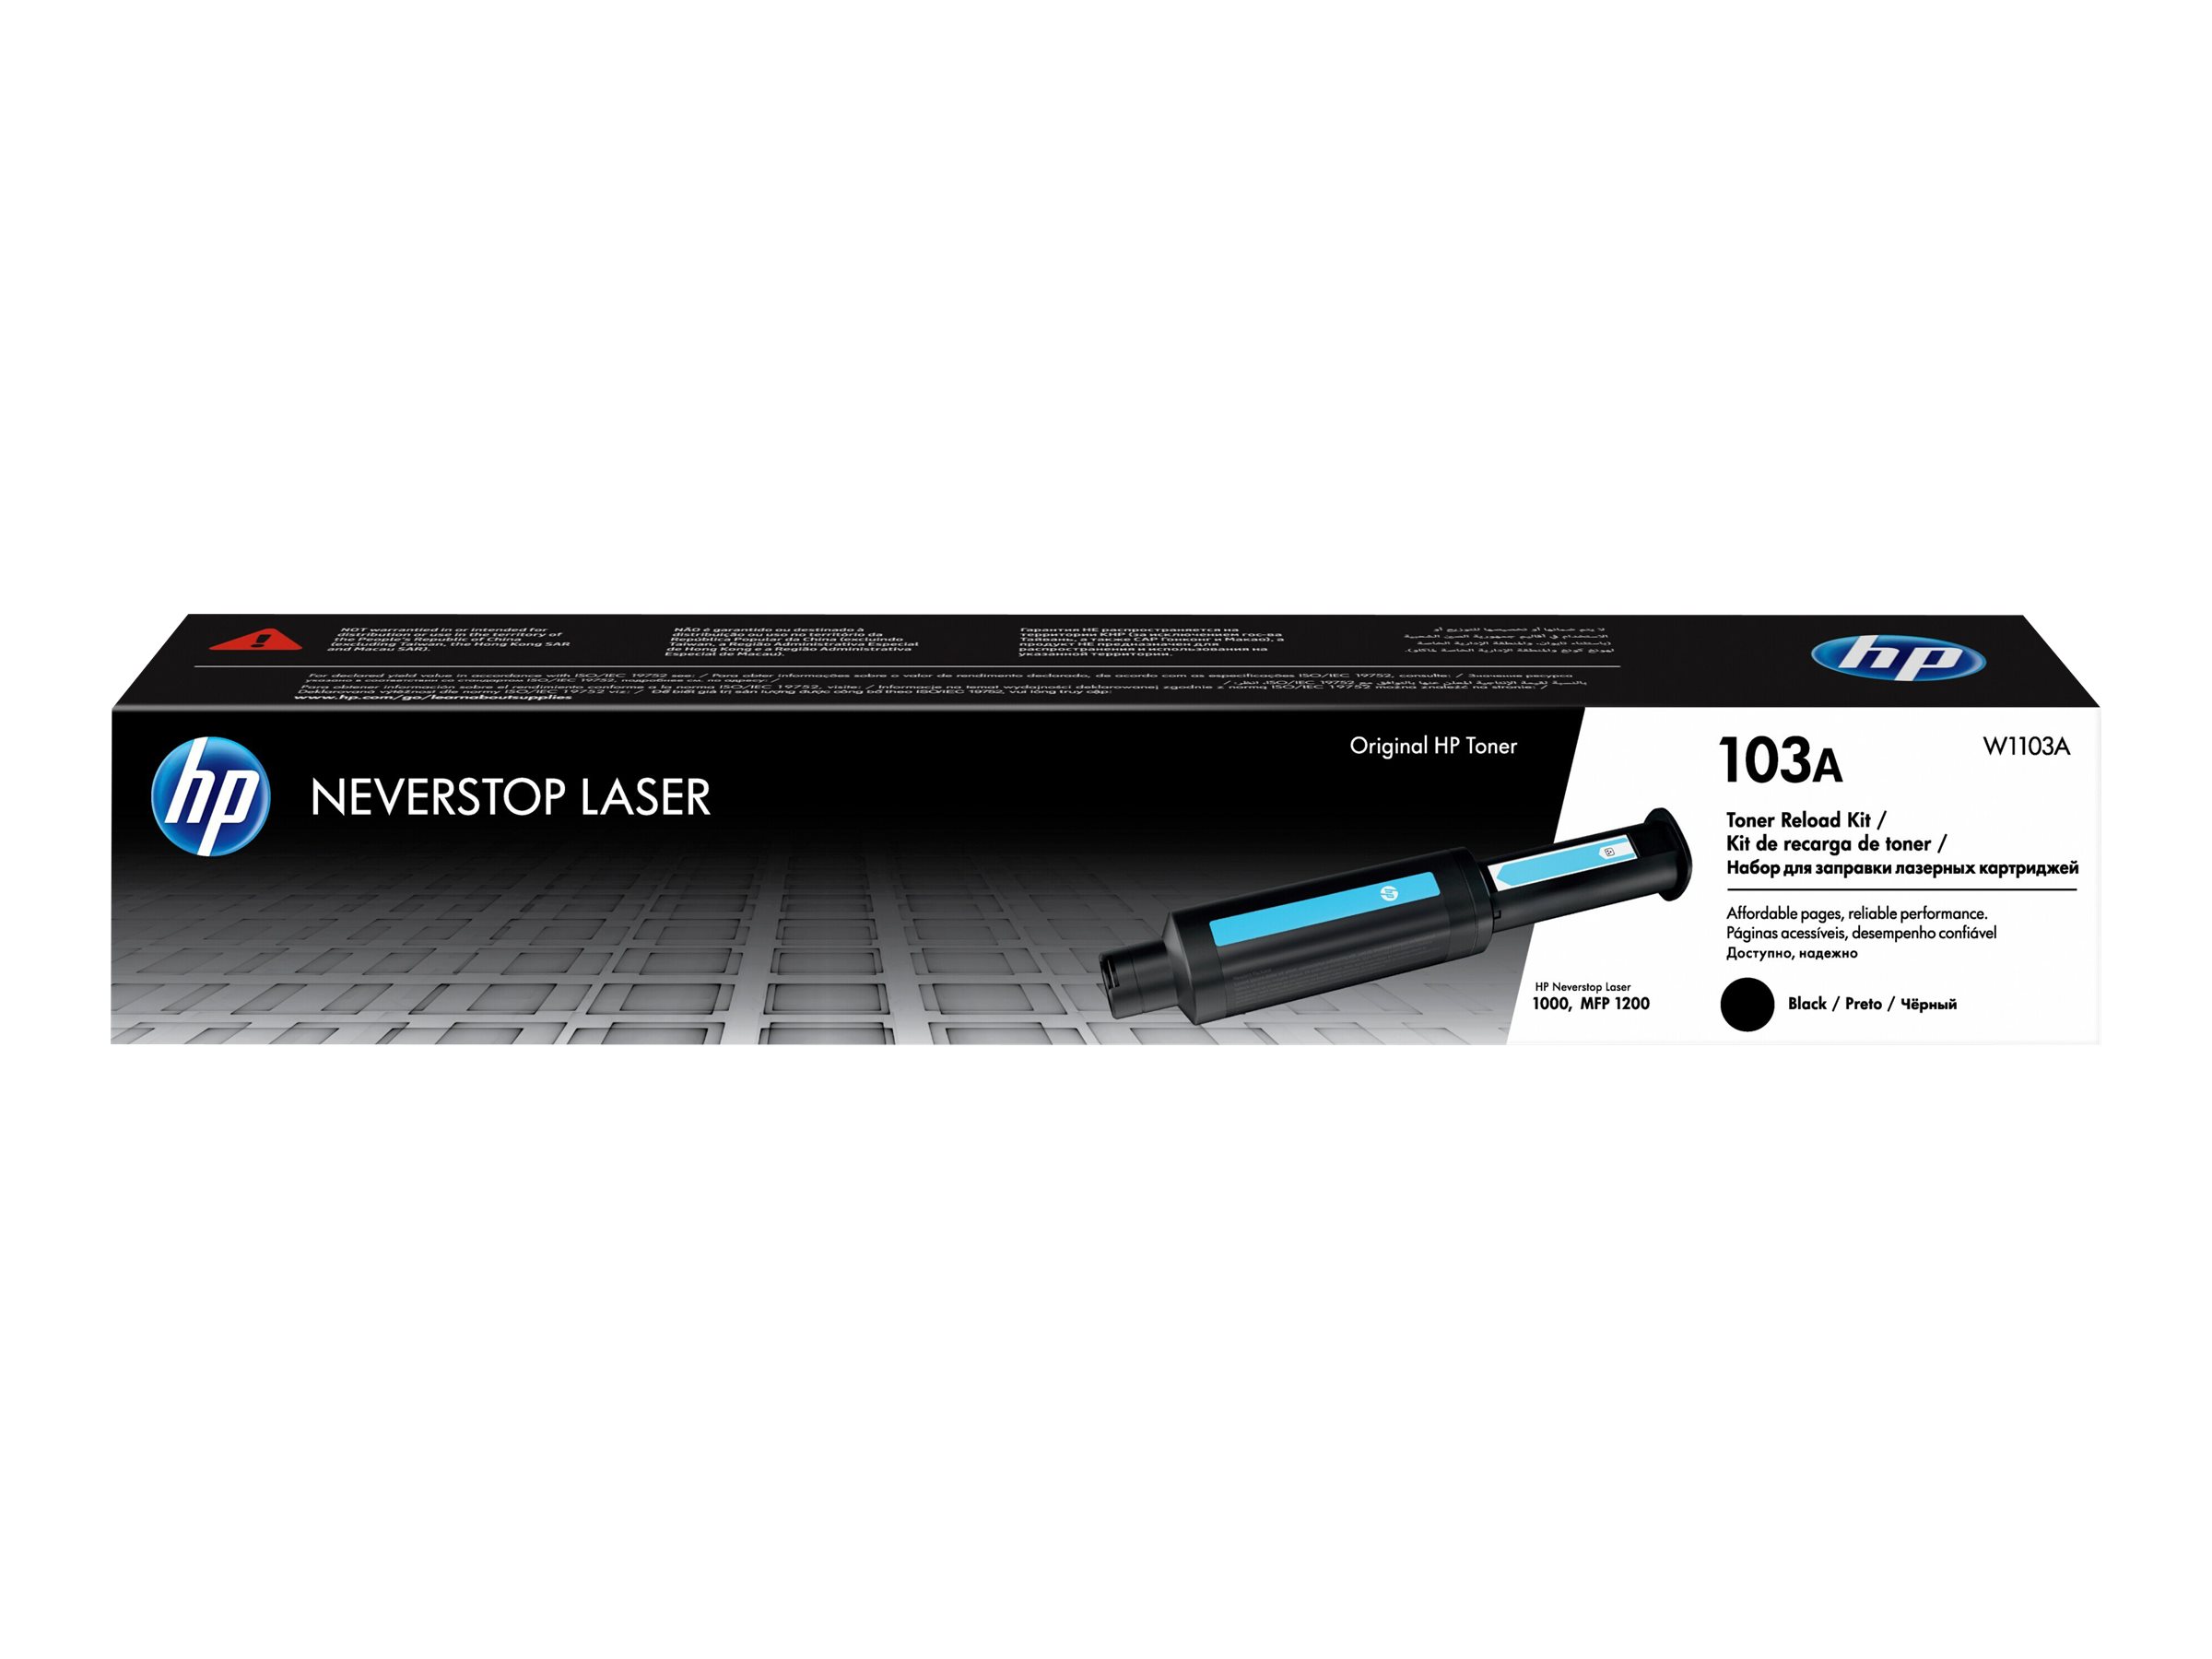 HP 103A Reload Kit - Schwarz - Tonernachfüllung - für Neverstop Laser 1000a, 1000n, 1000w, MFP 1200a, MFP 1200n, MFP 1200nw, MFP